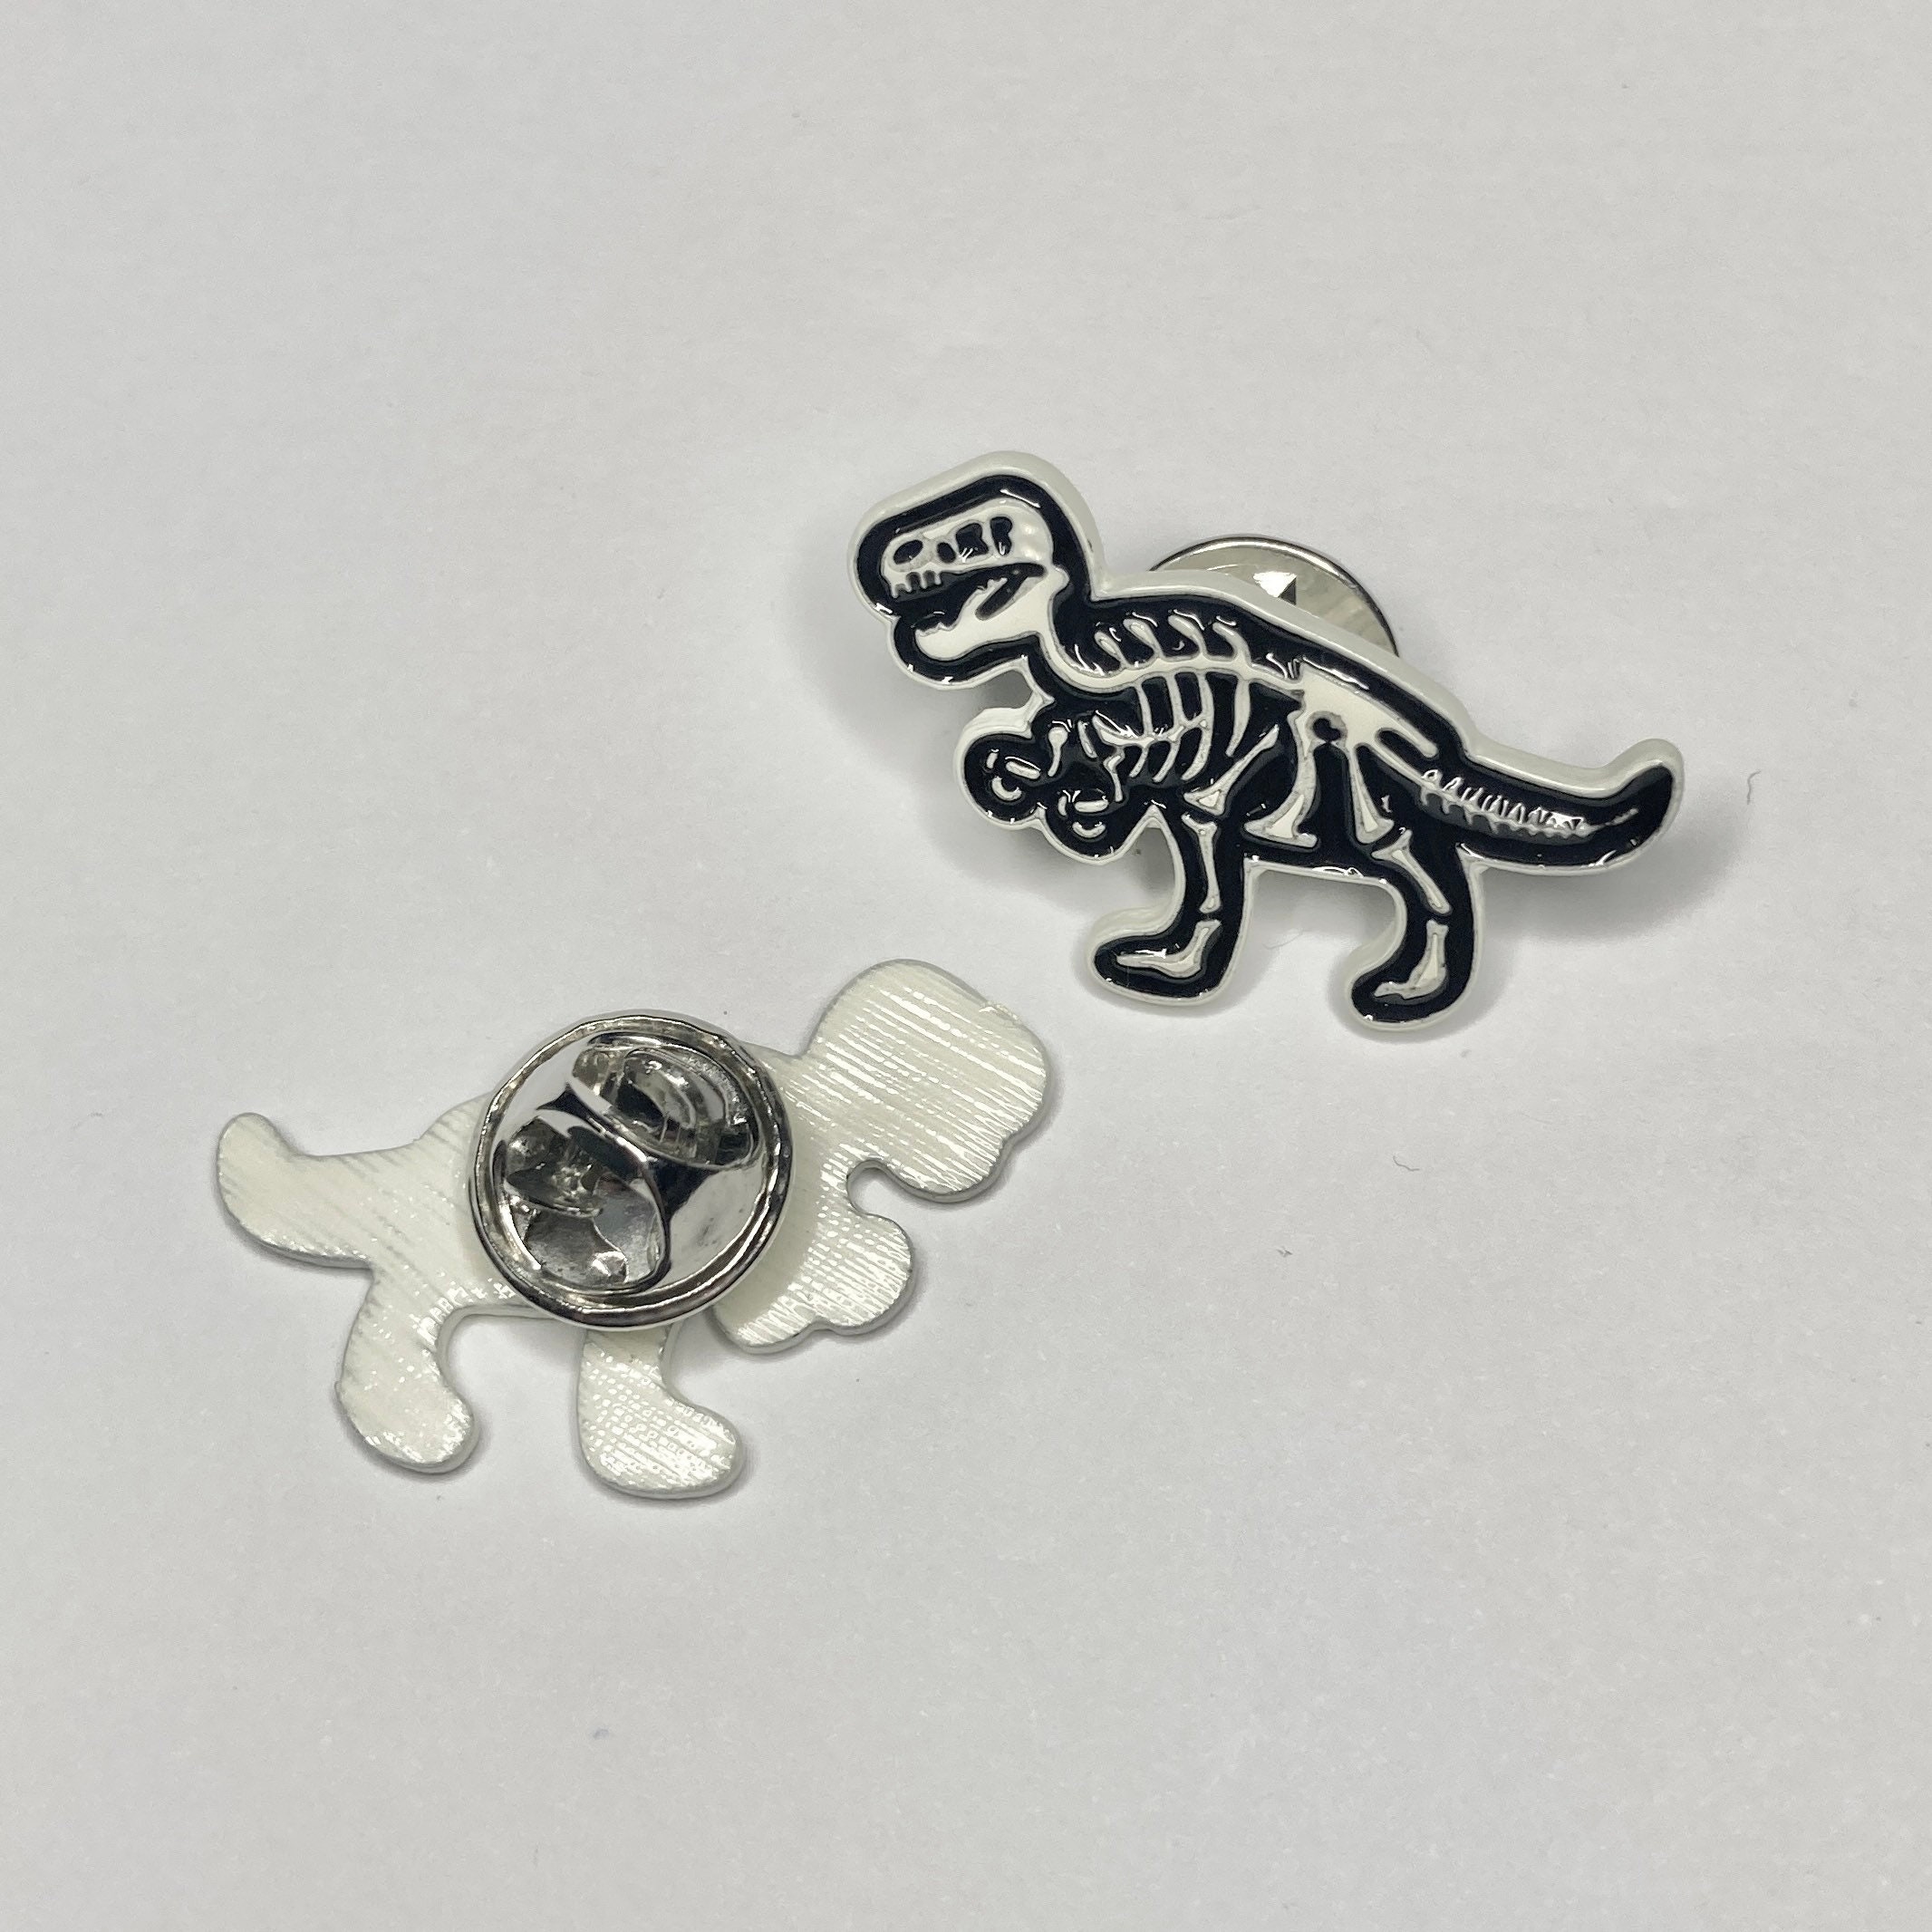 Dinosaur Skeleton Enamel Pin Badge Brooch Set of 5 - Etsy UK